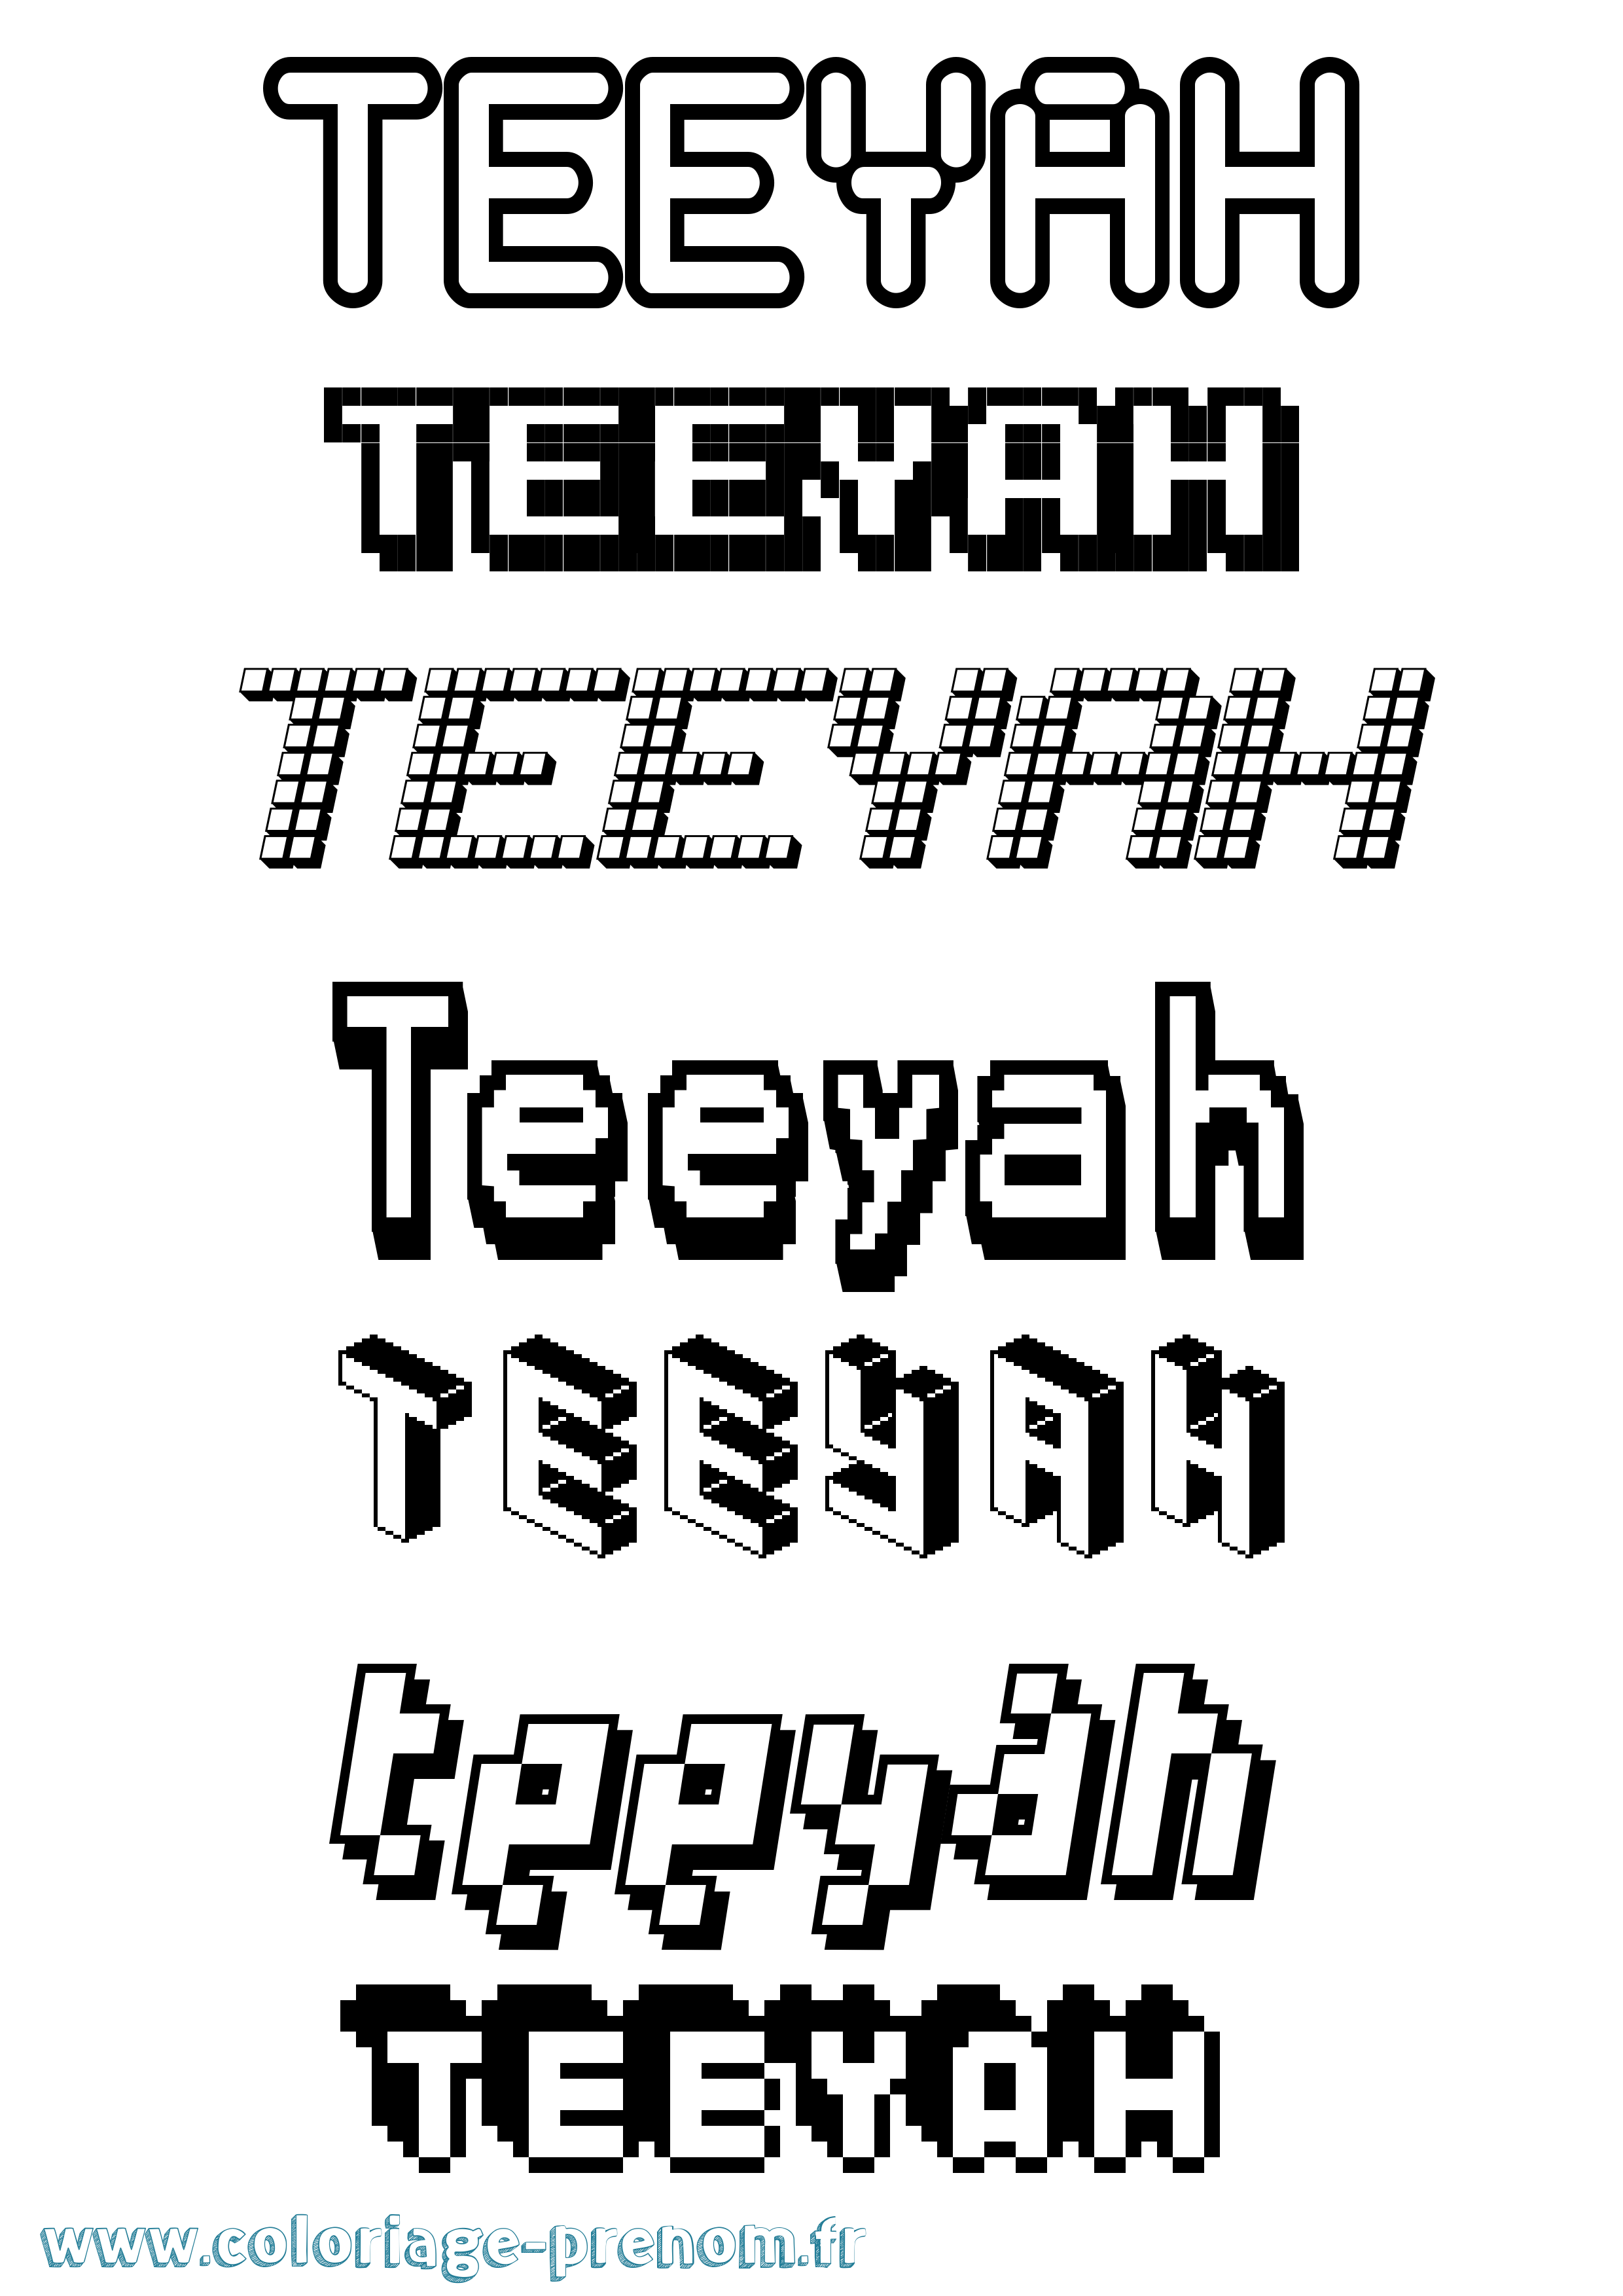 Coloriage prénom Teeyah Pixel